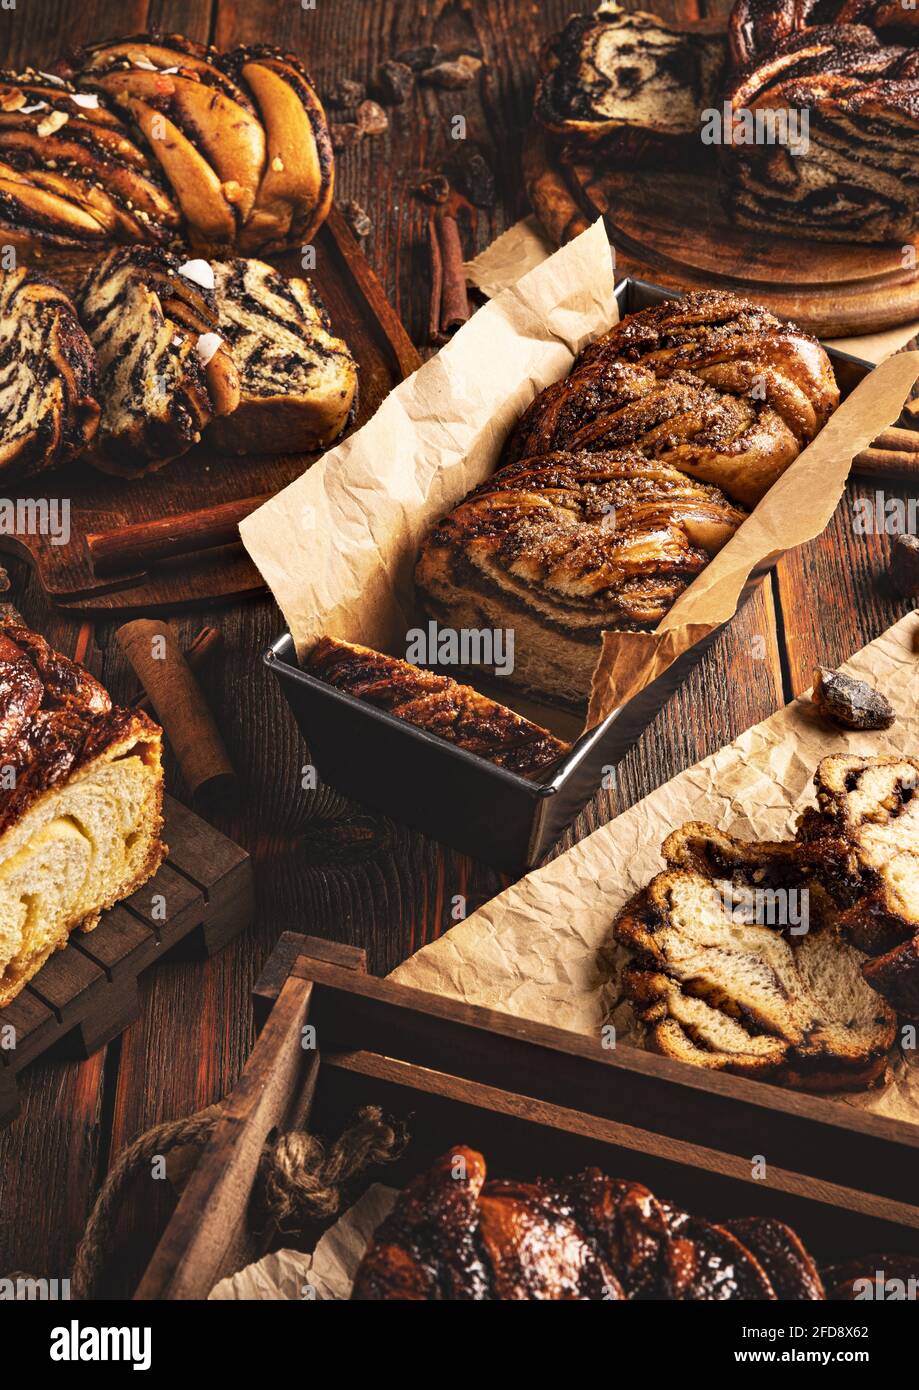 Still life of various type of babka sweet swirl sourdough bread on wooden background Stock Photo